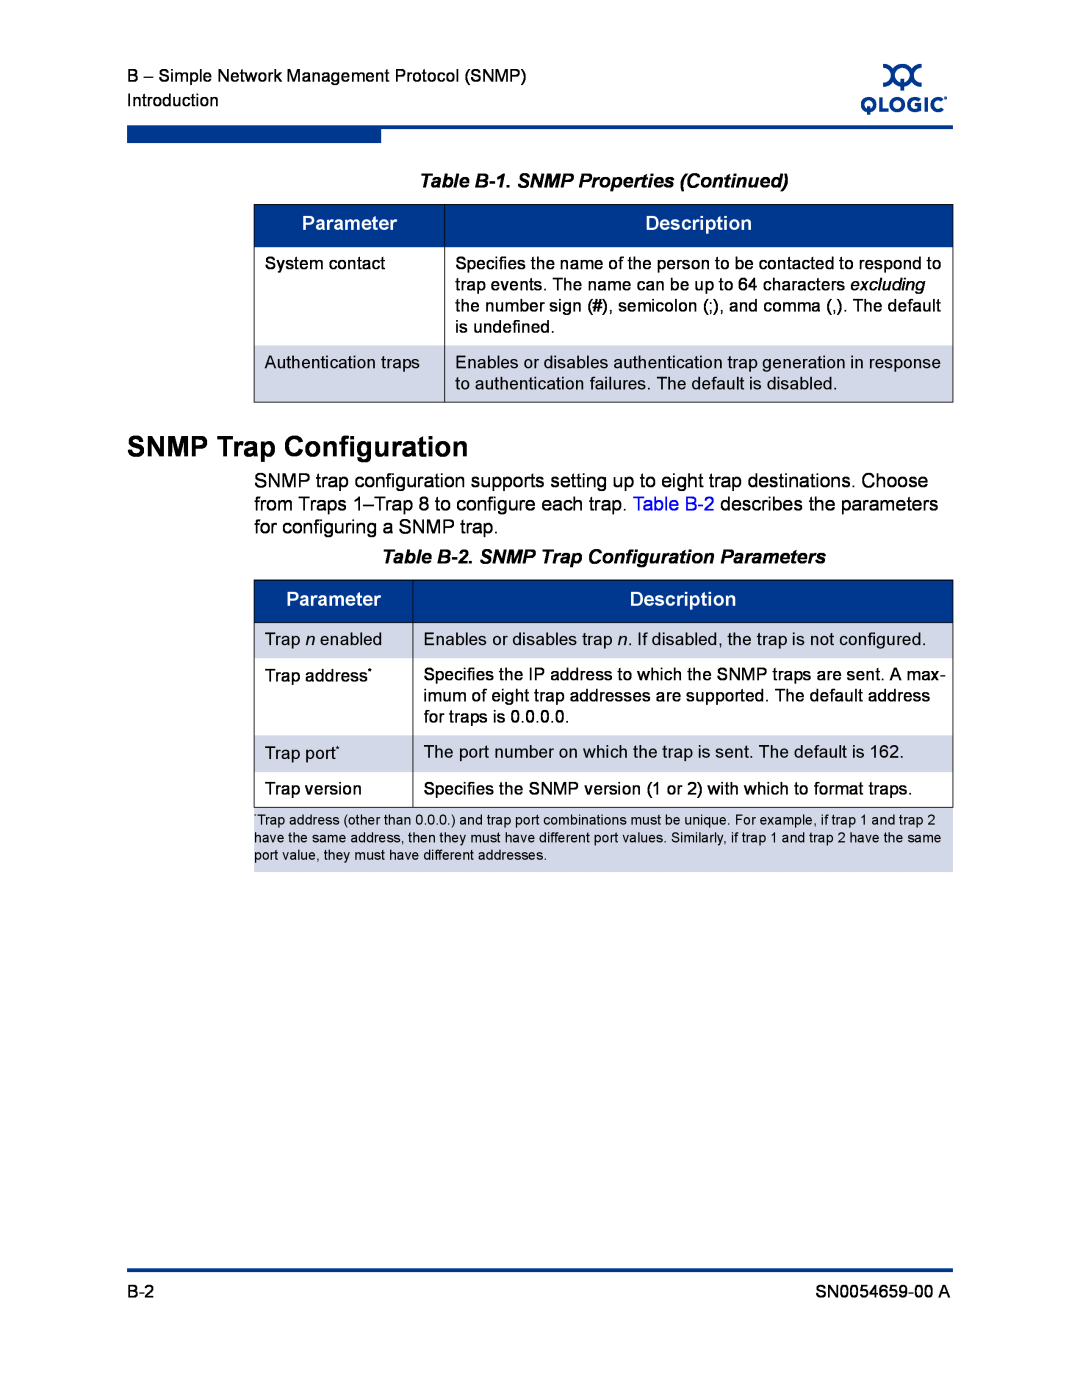 Q-Logic ISR6142 manual SNMP Trap Configuration, Table B-1. SNMP Properties Continued, Parameter, Description 